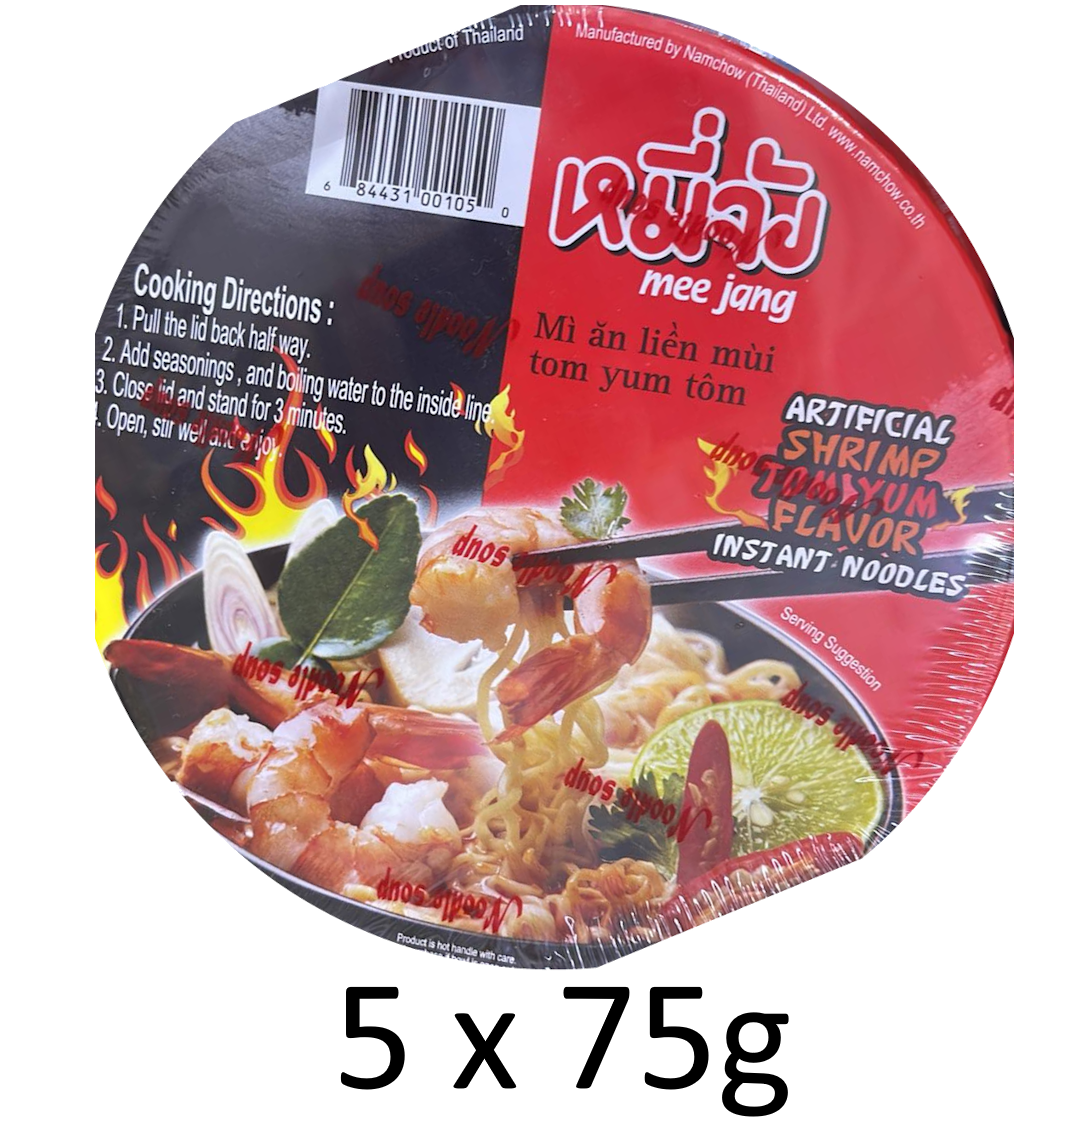 Namchow Mee-Jang Artificial Shrimp Tom Yum Flavor Instant Noodles